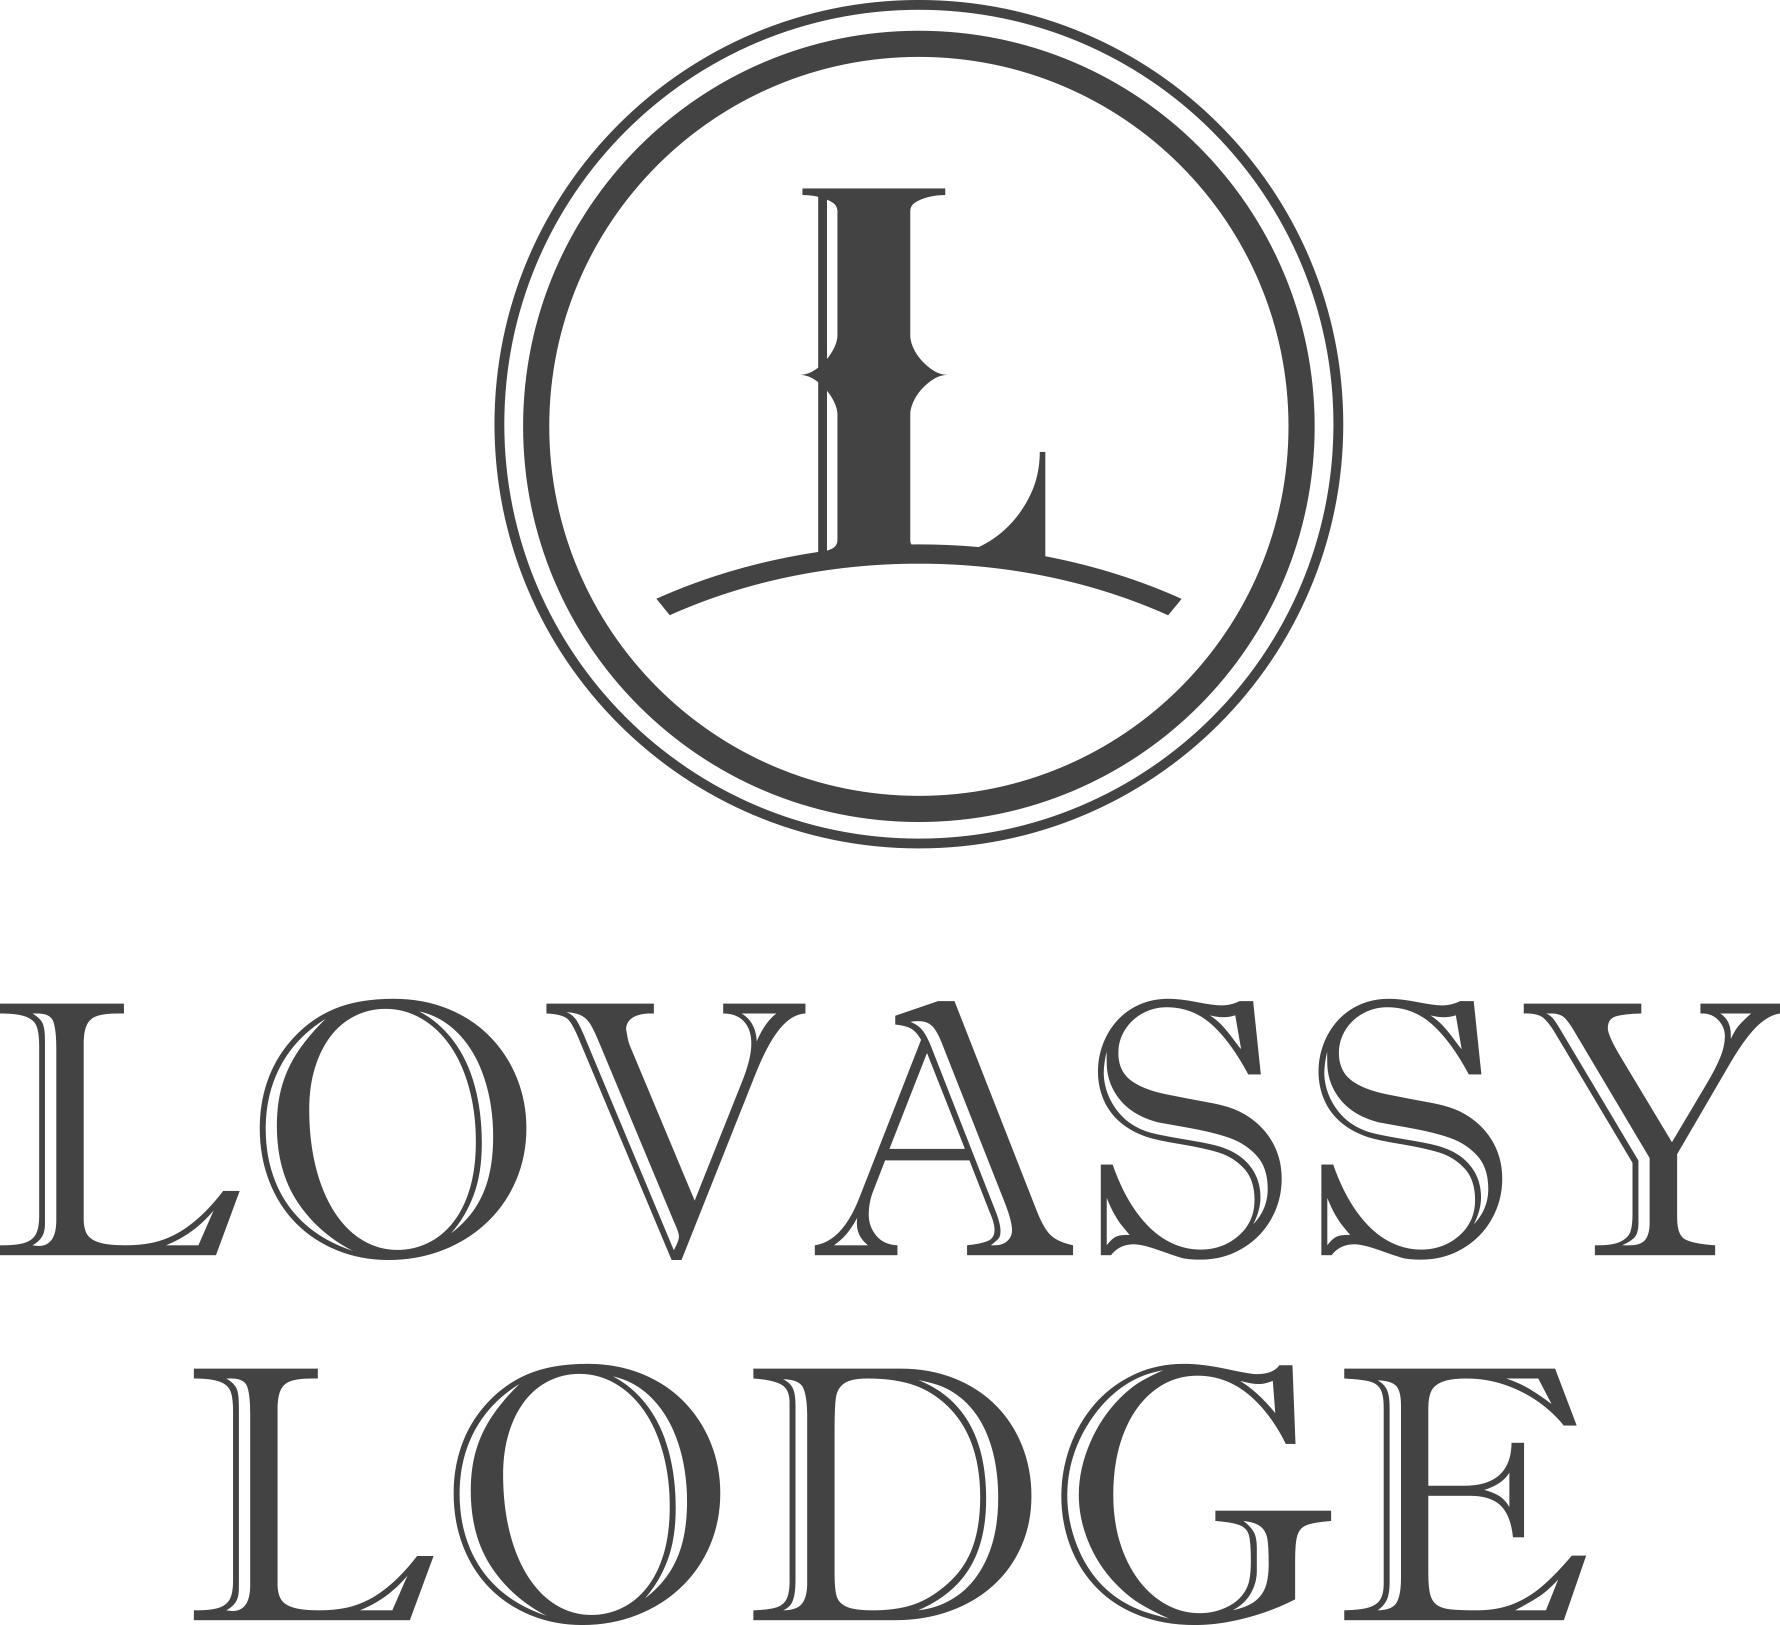 Lovassy Lodge